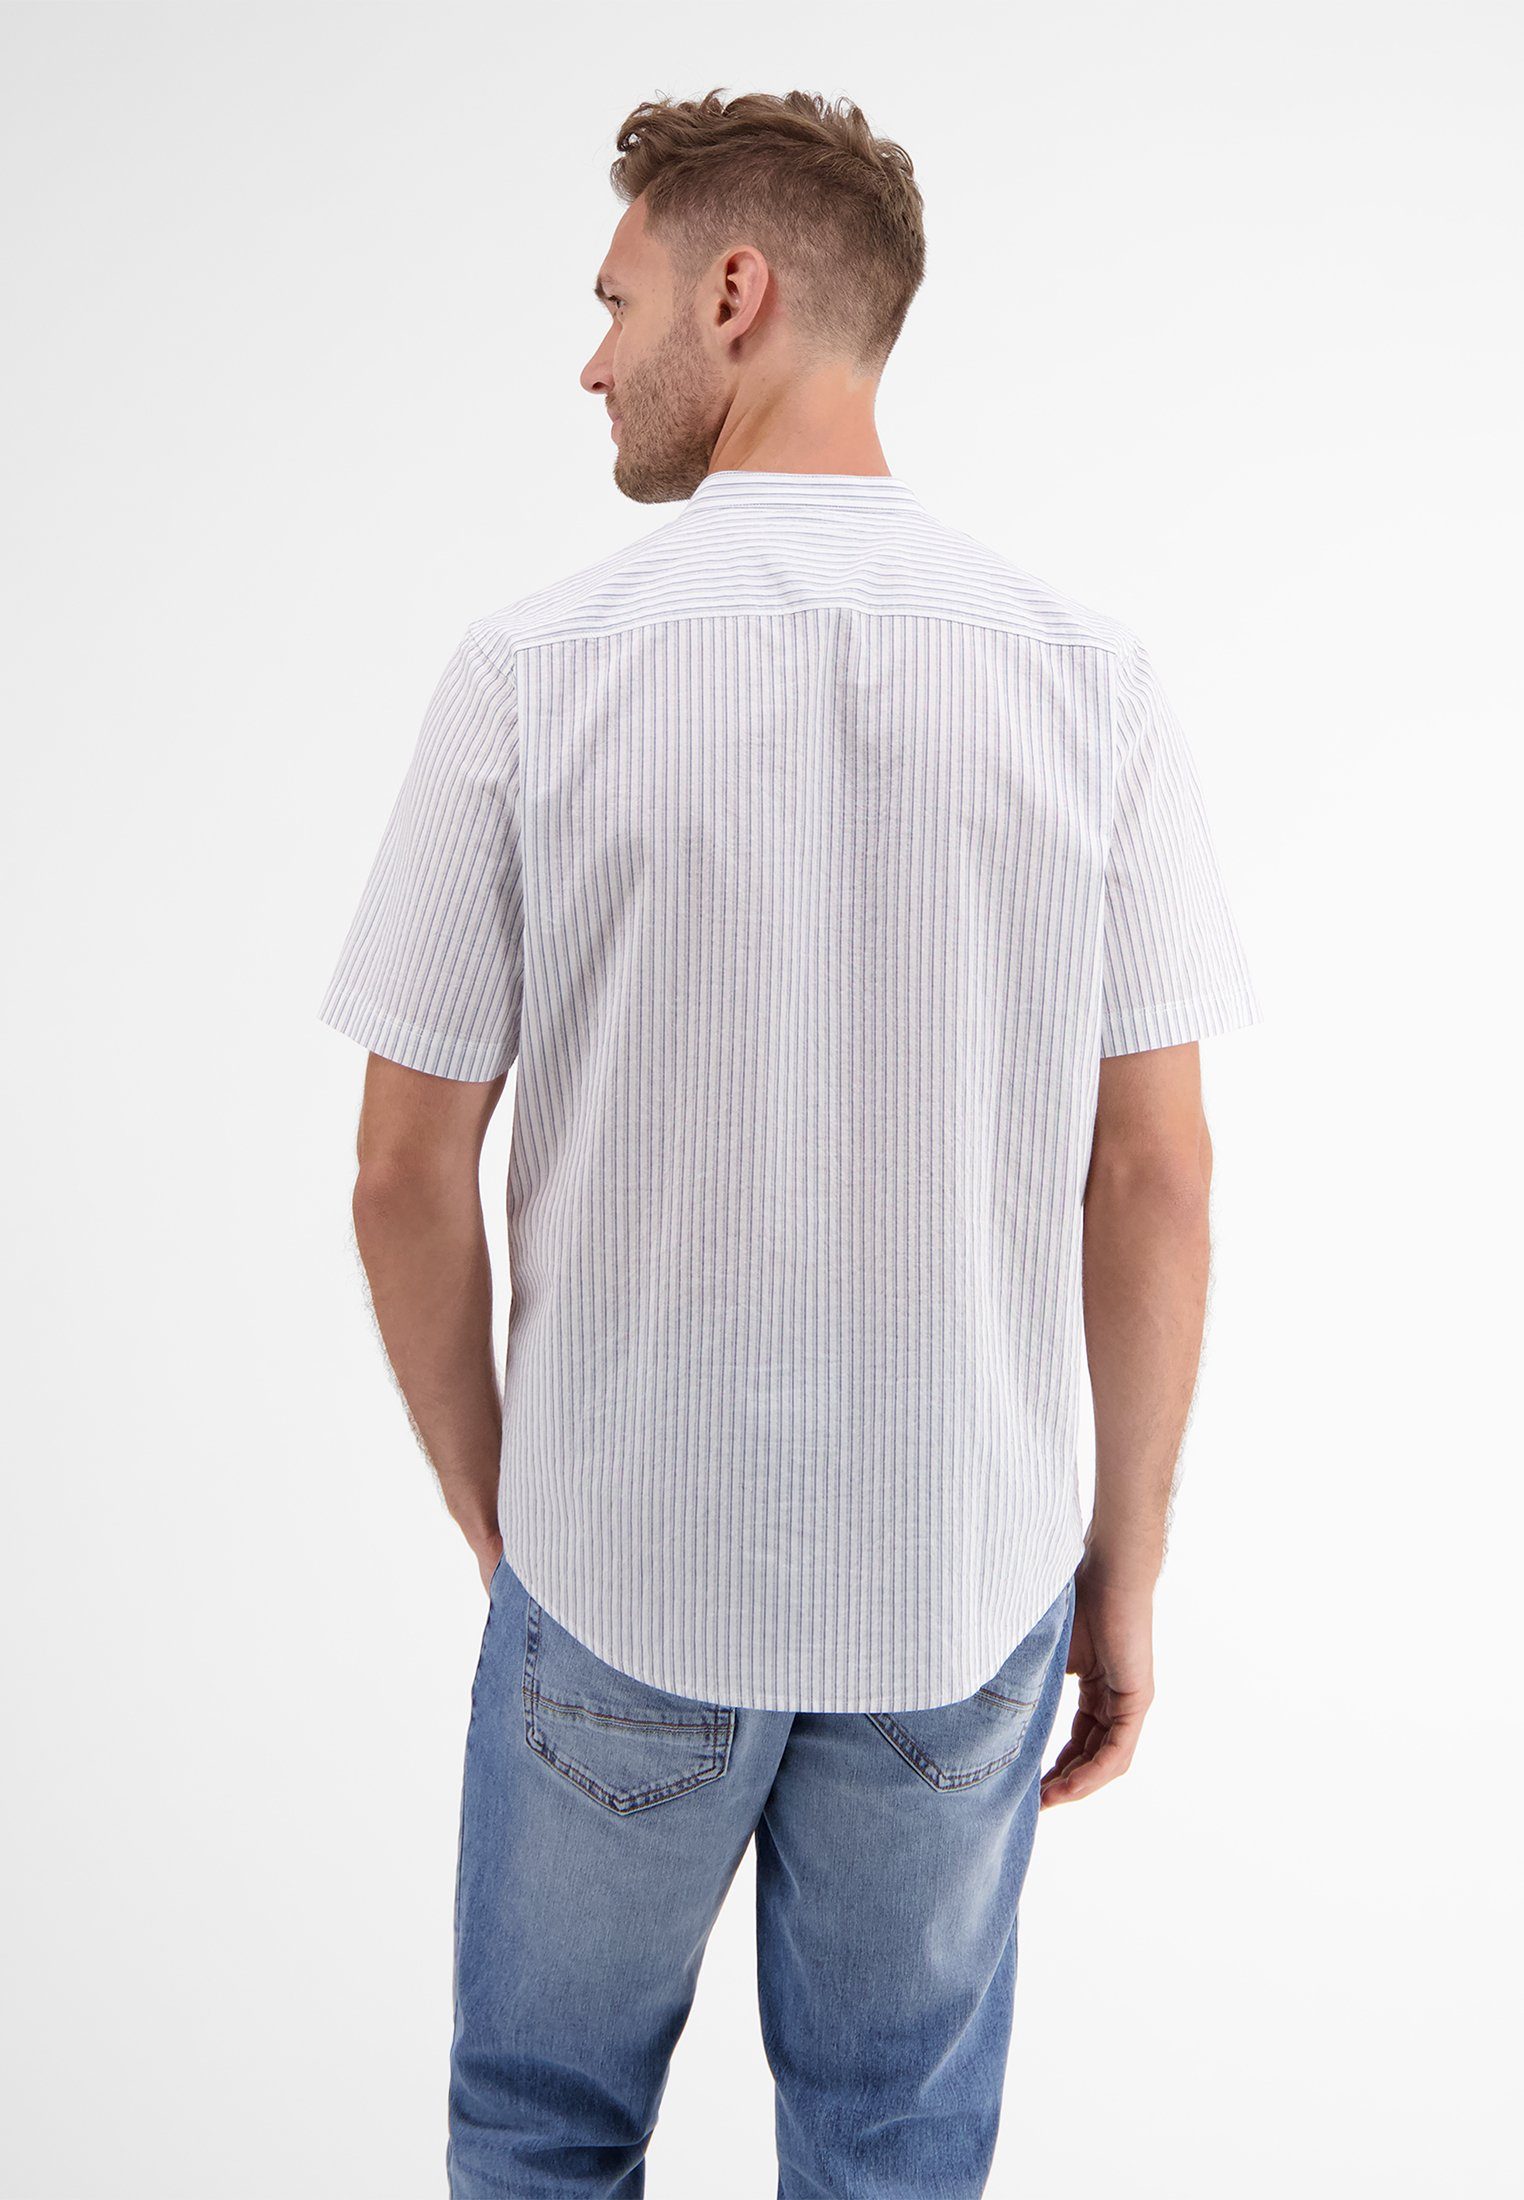 LERROS Kurzarmhemd LERROS Gestreiftes Seersucker-Kurzarmhemd, Streifen auf  Seersuckerqualität | Hemden